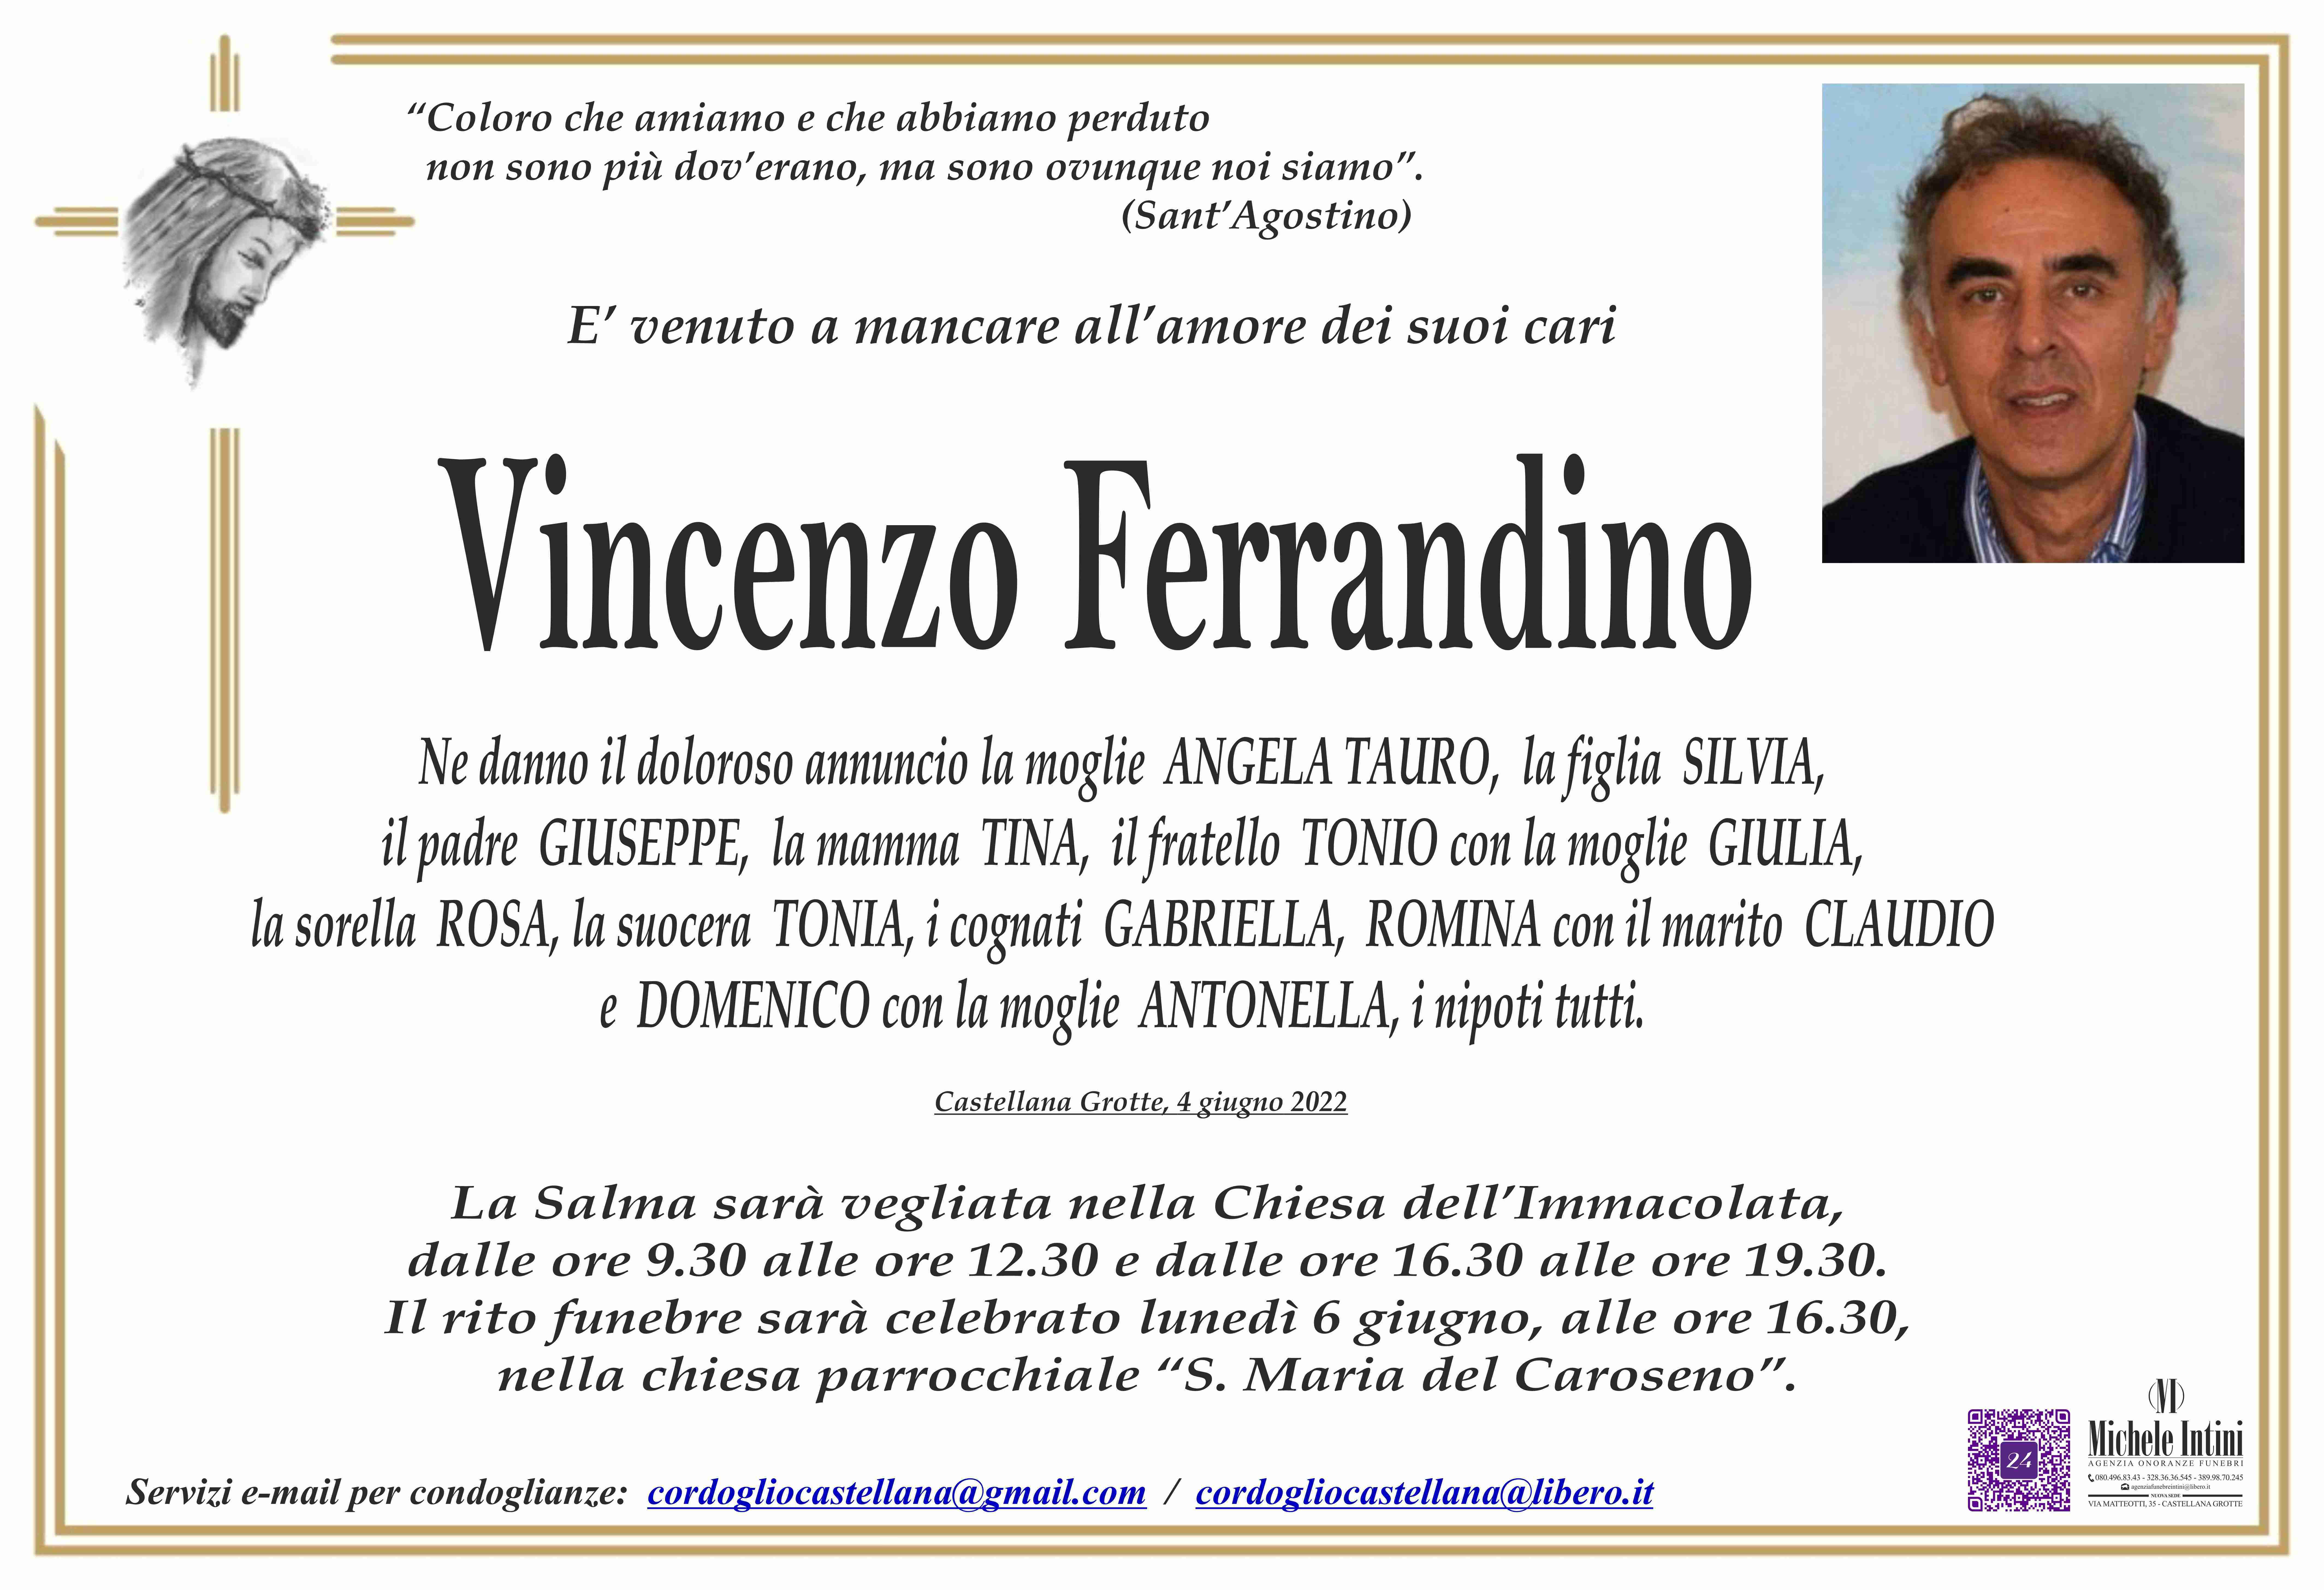 Vincenzo Ferrandino